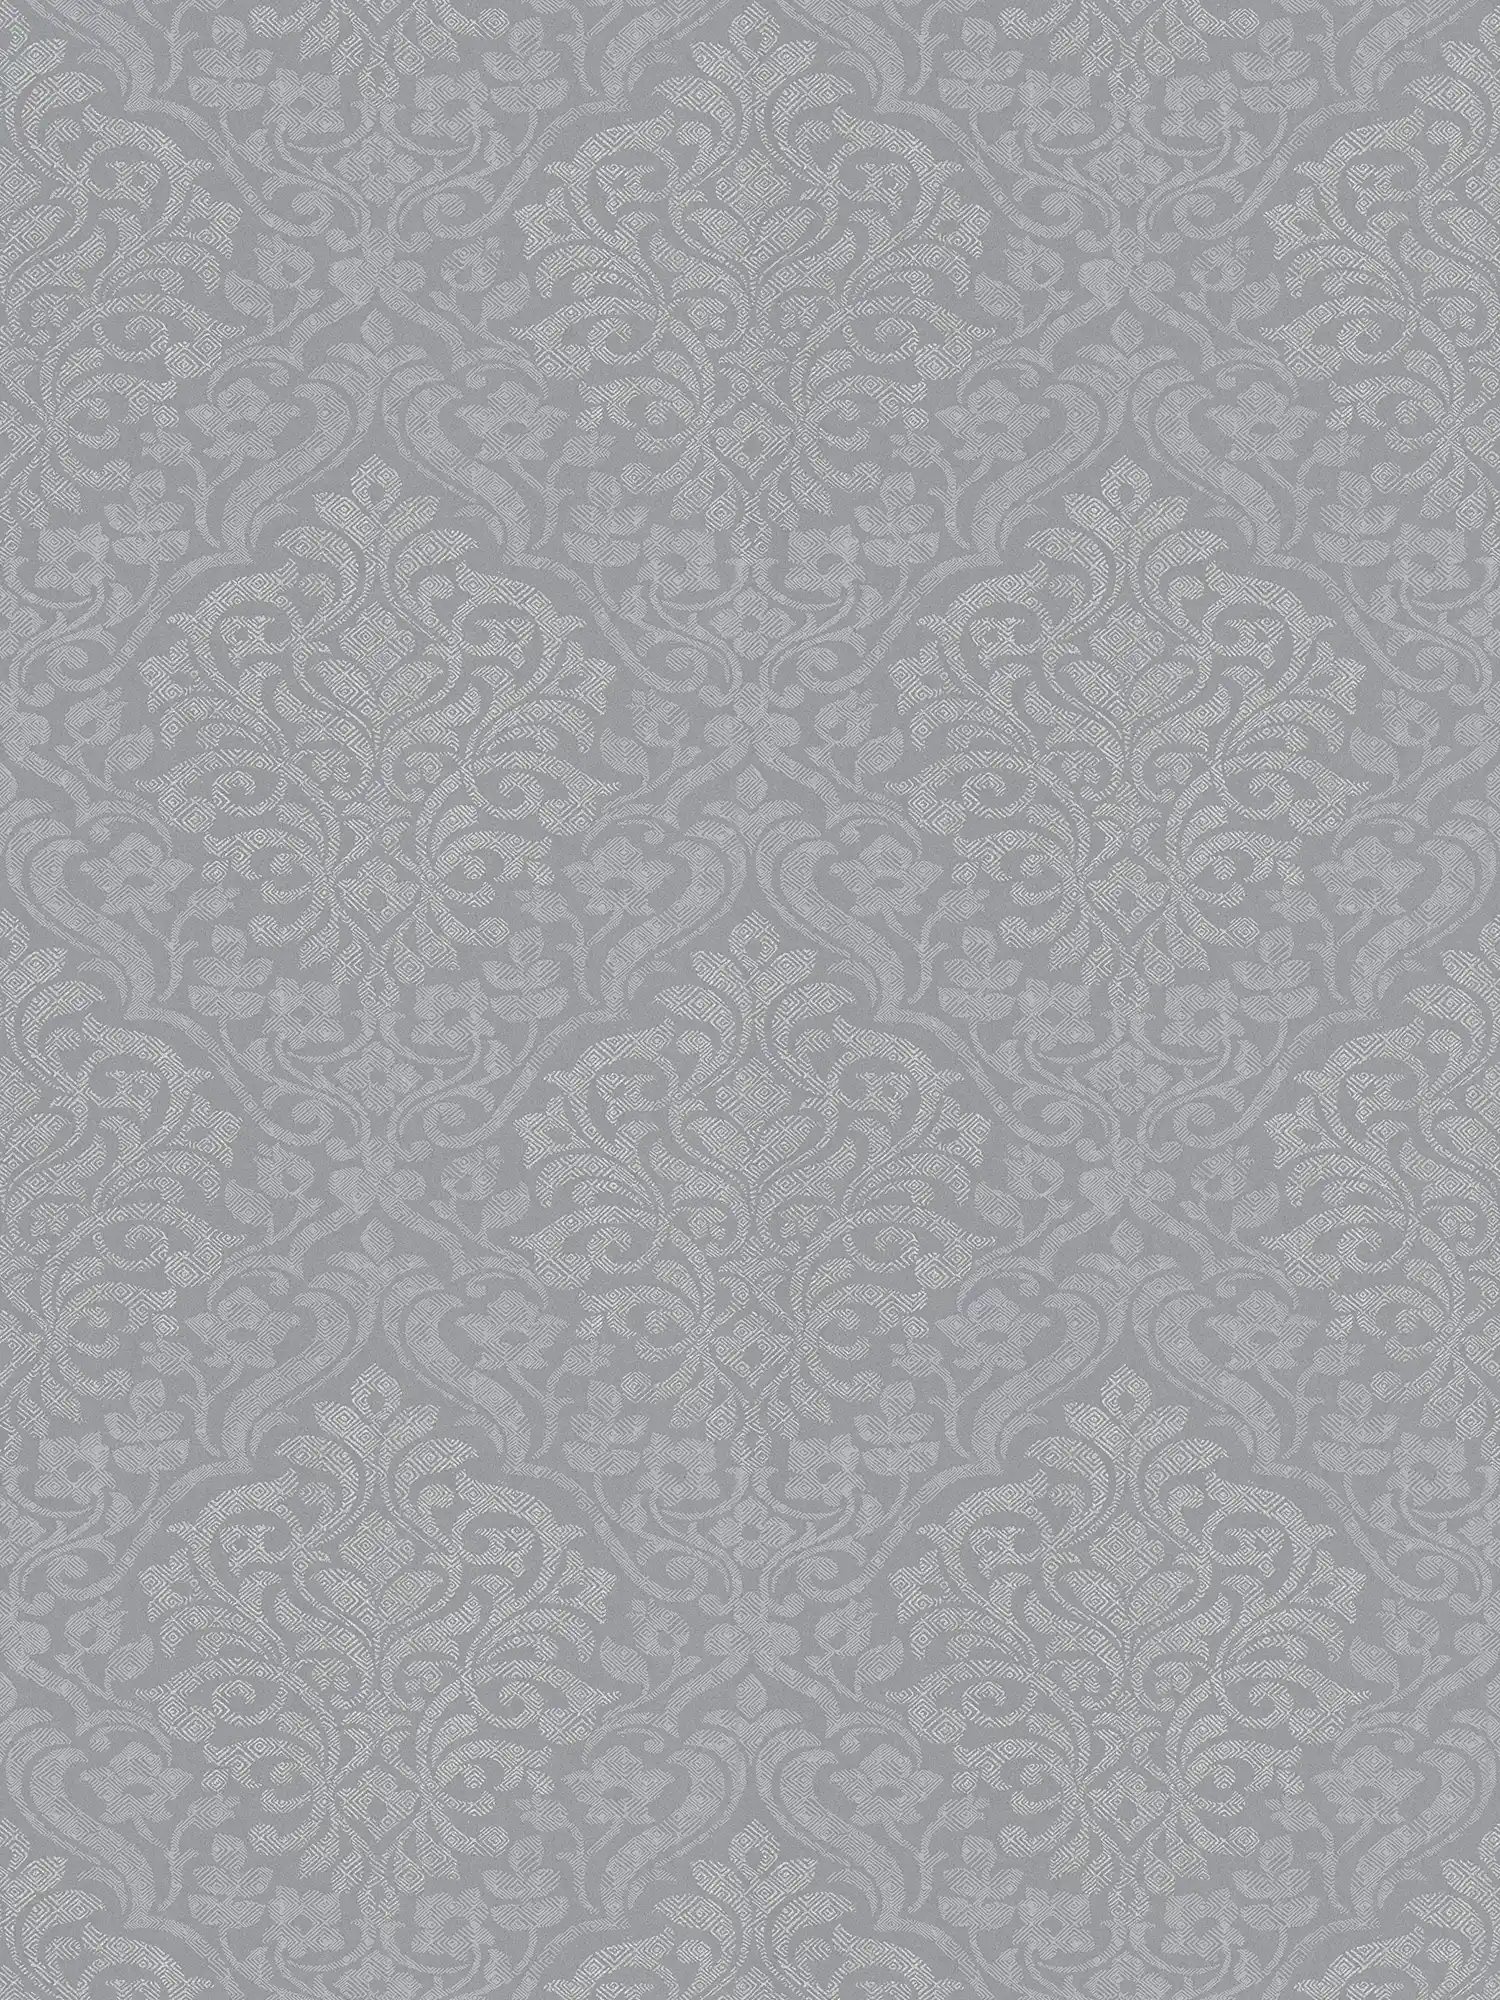 Floral ornamental wallpaper diamond pattern in ethnic style - grey, silver
